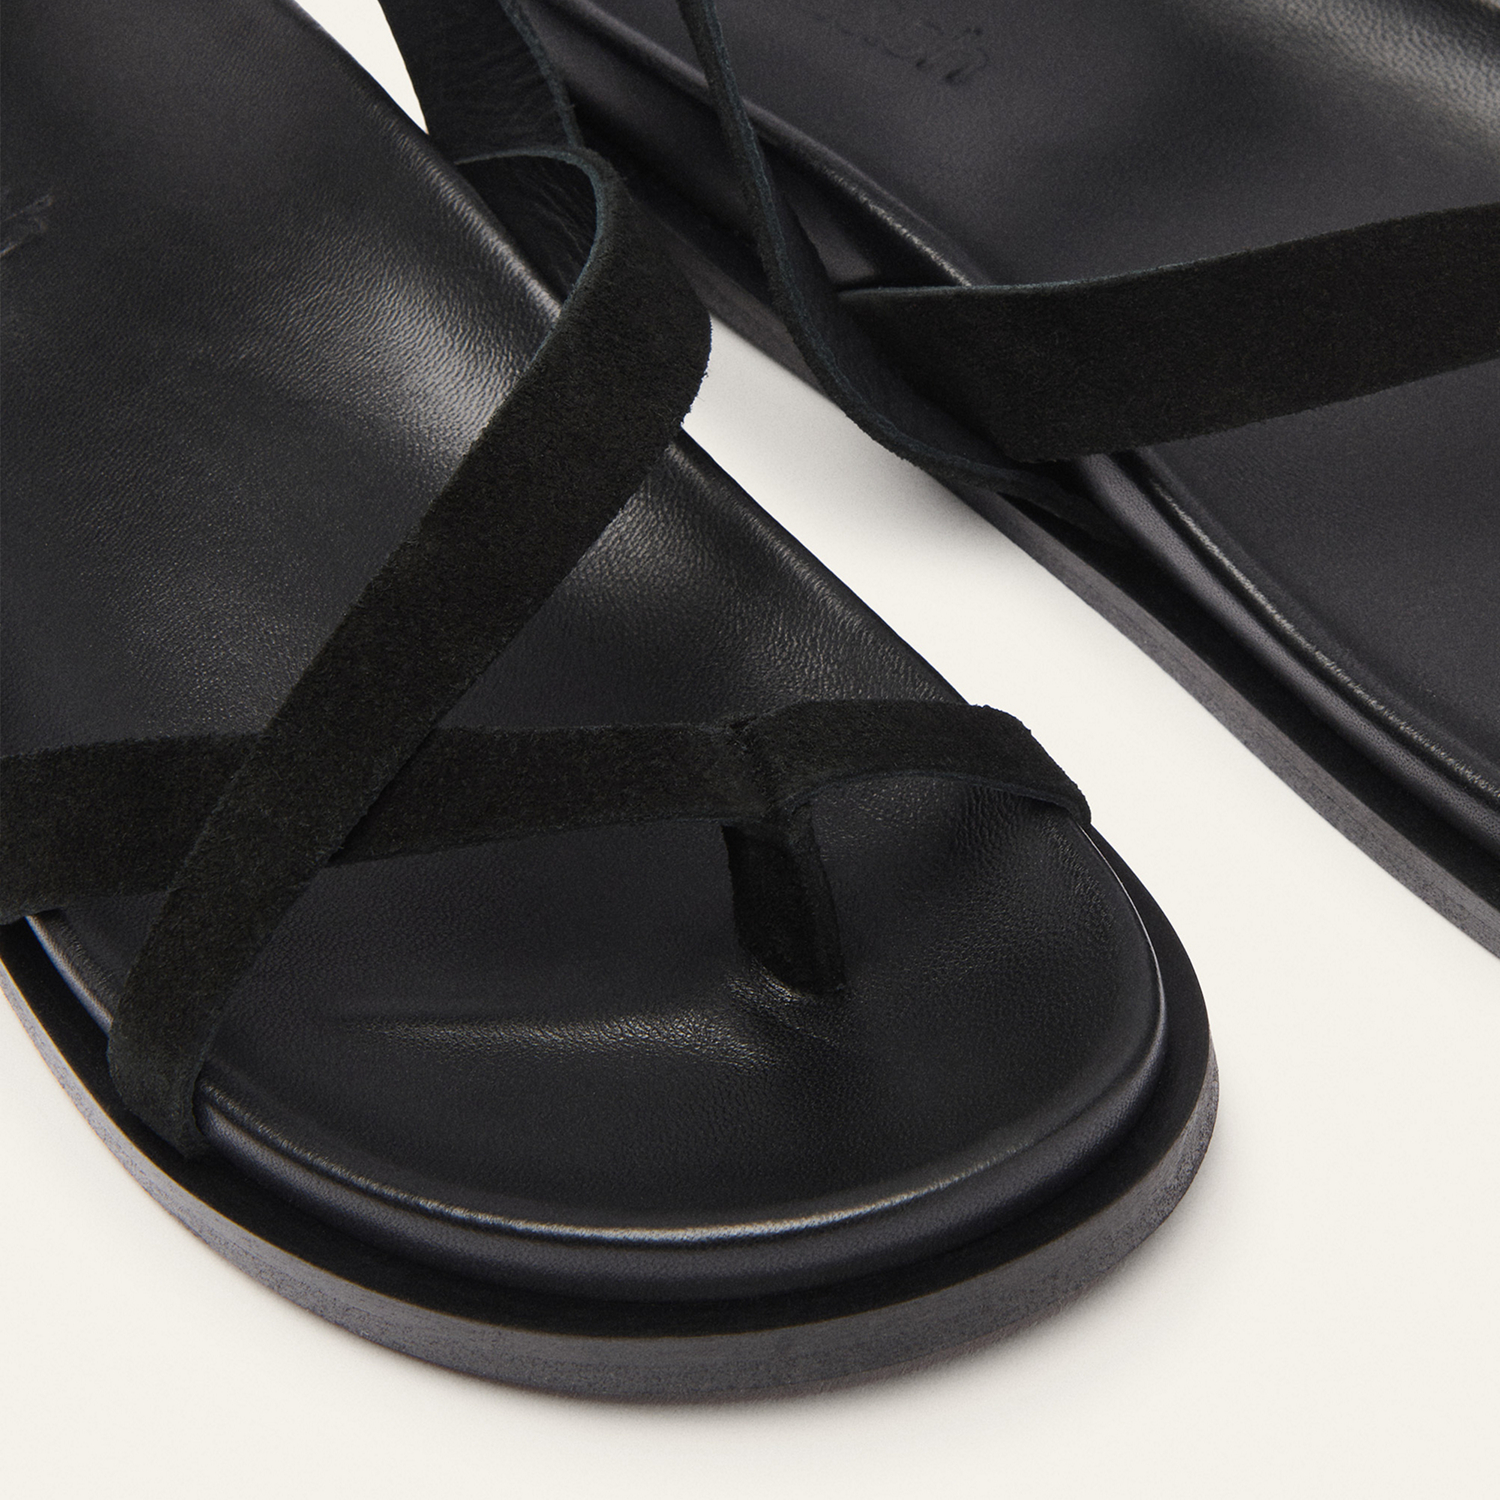 BA&SH Caicos Flat Leather Sandals